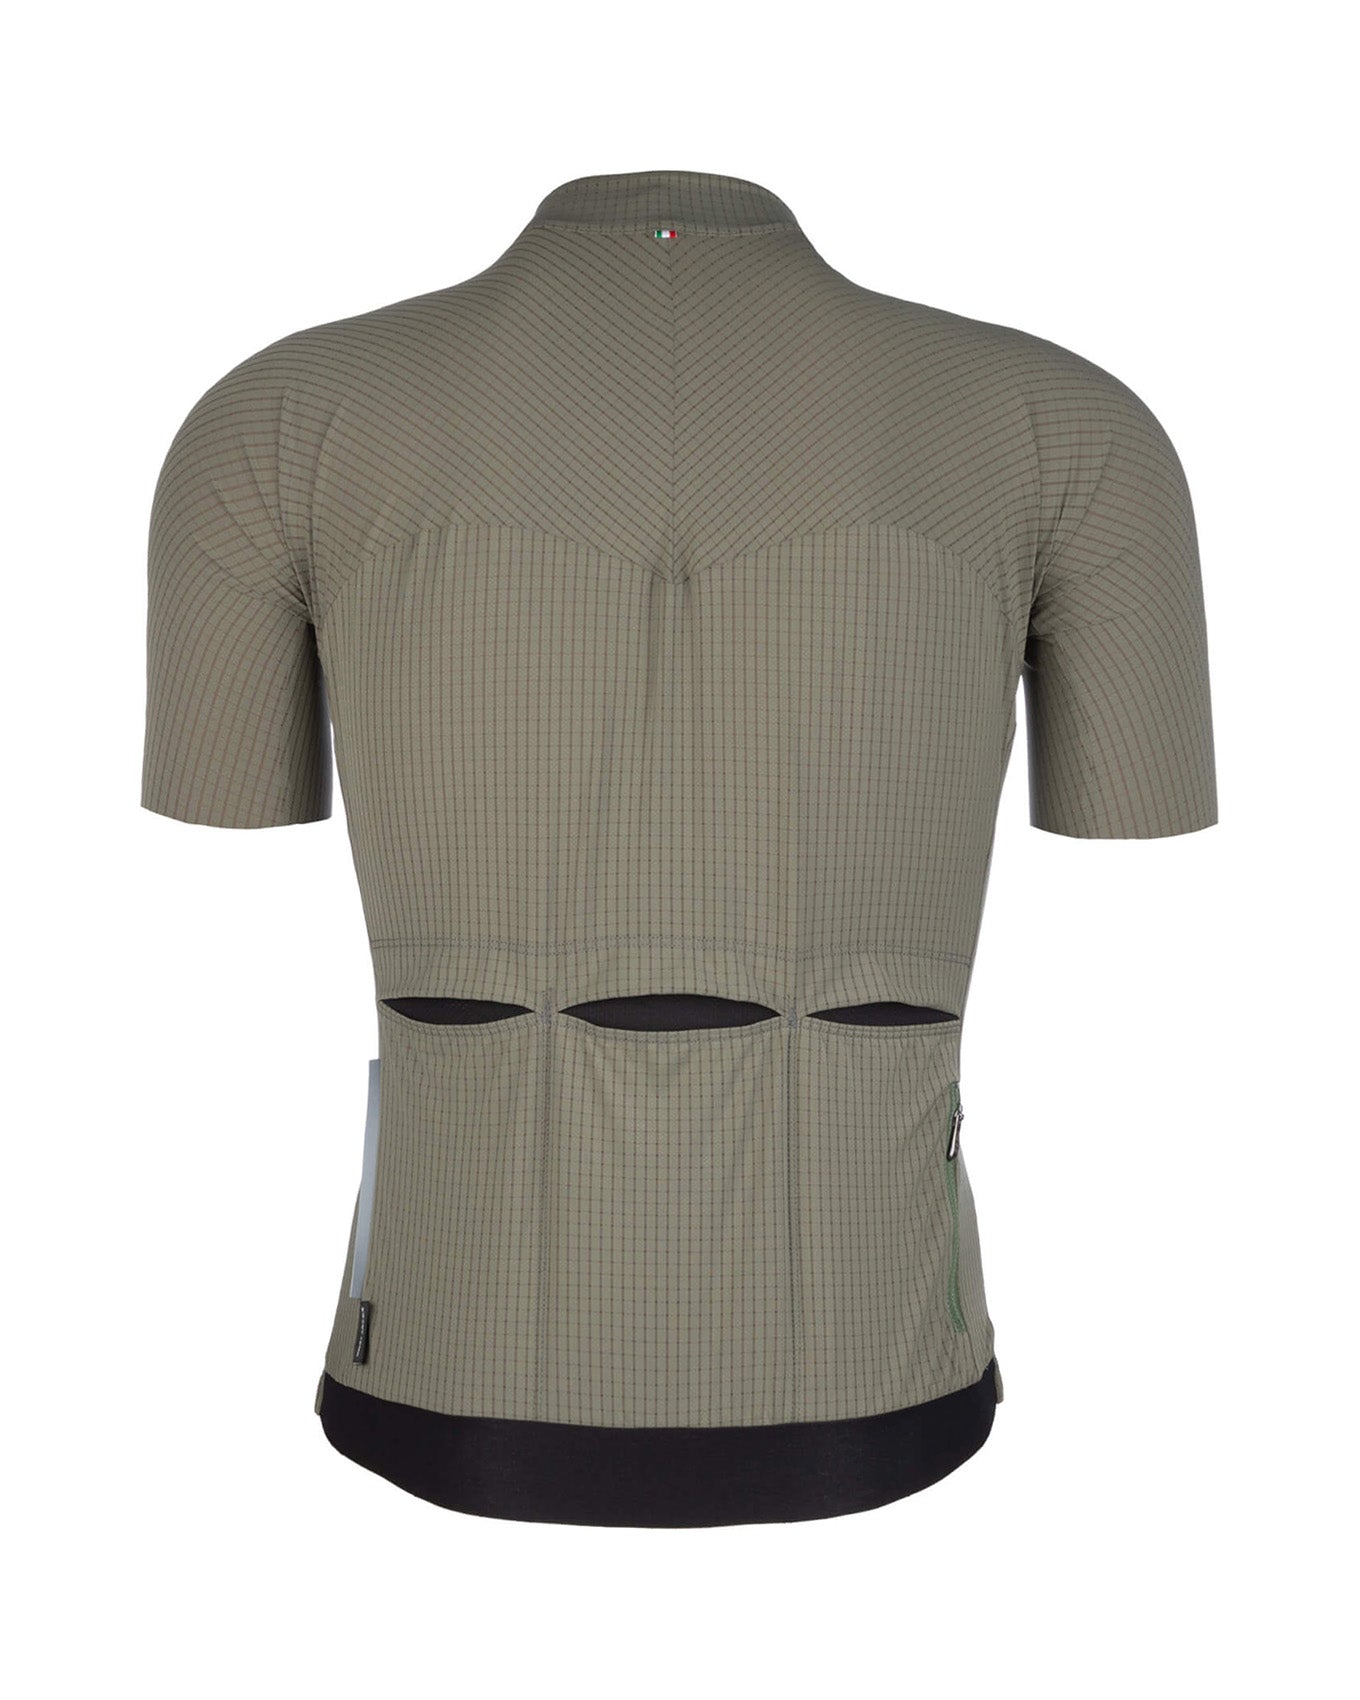 Pinstripe X L1 Short Sleeve Jersey